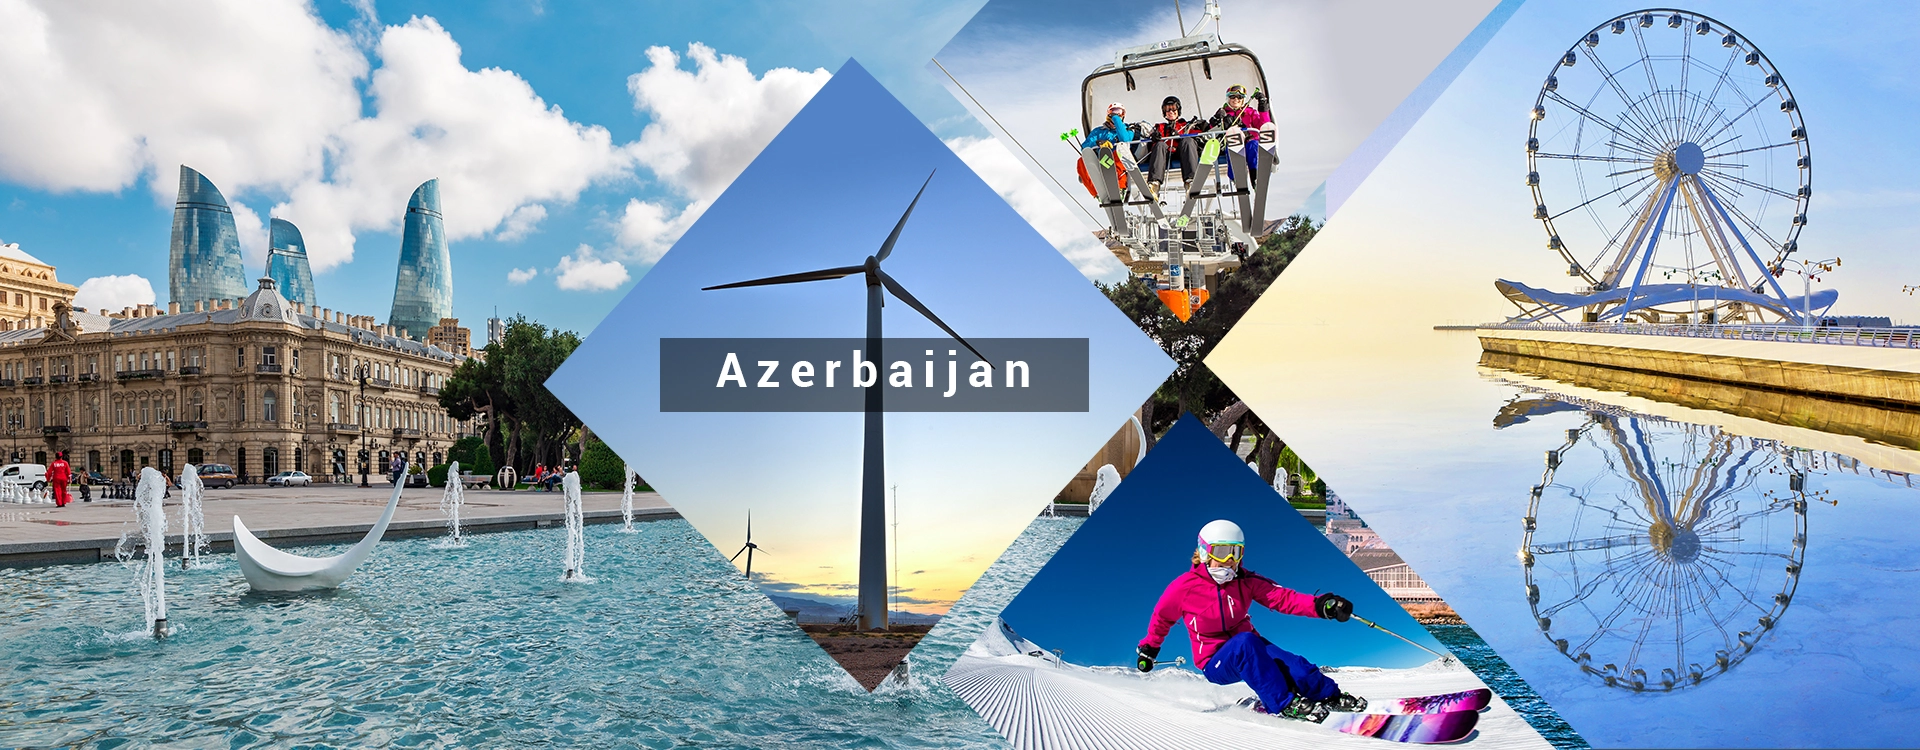 Azerbaijan Tour Packages